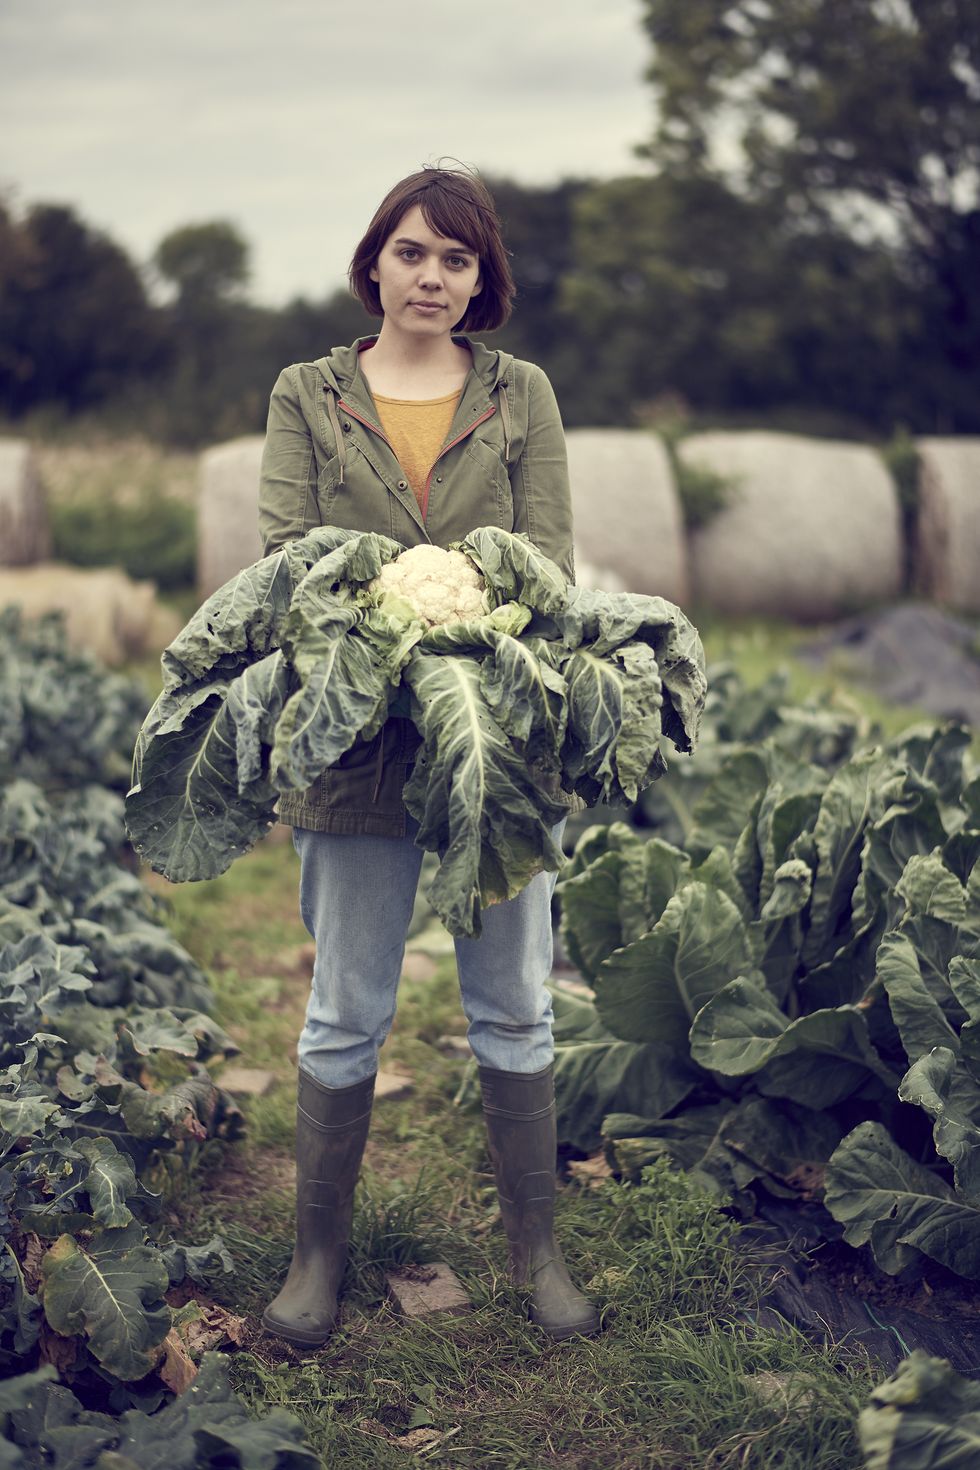 Portrait of young female community farmer holding cauliflower